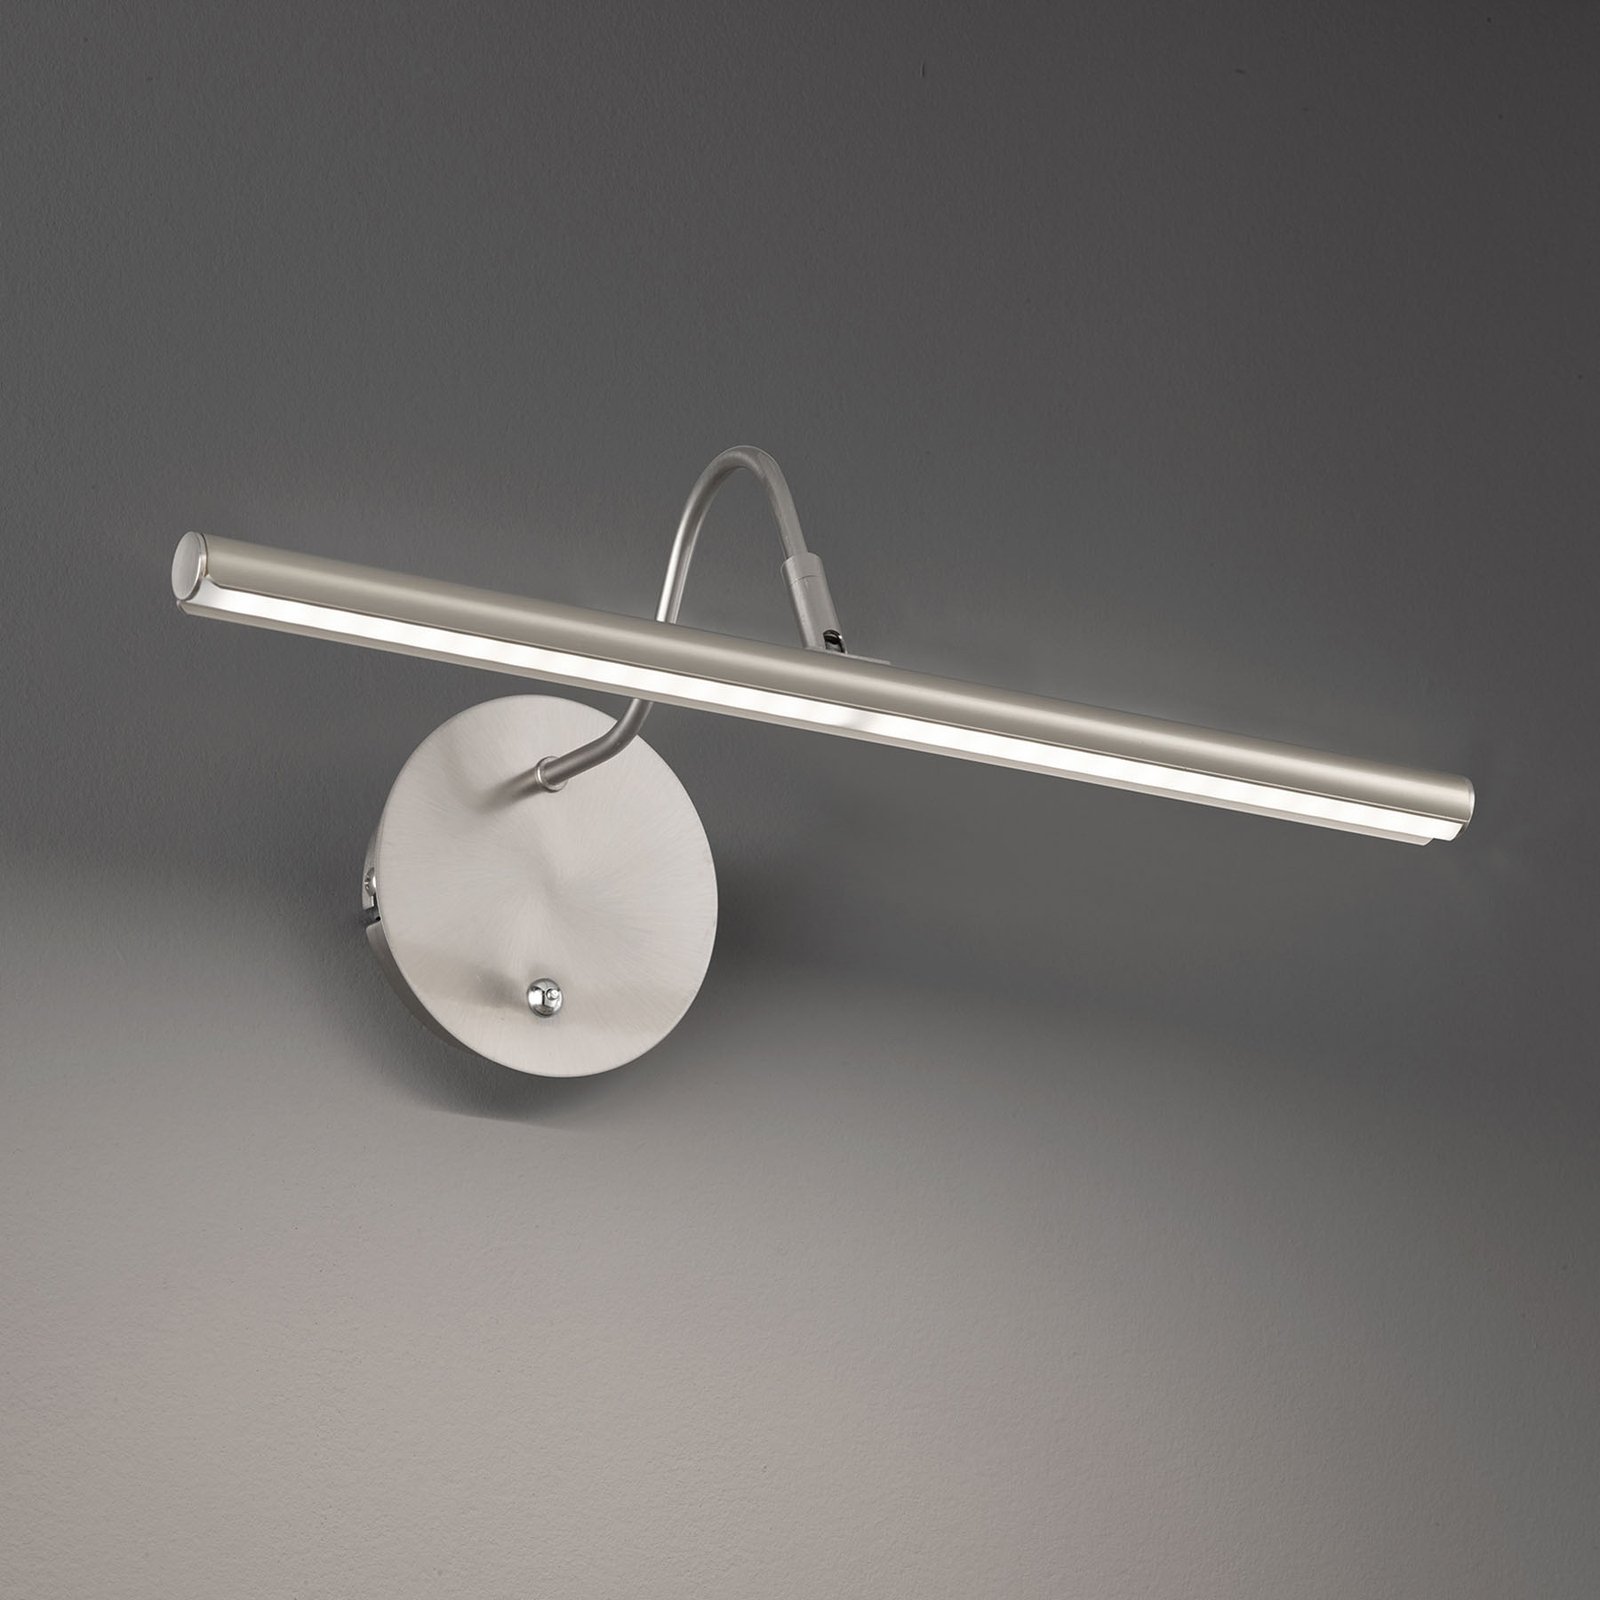 LED wandlamp Nami met schakelaar, nikkelkleurig